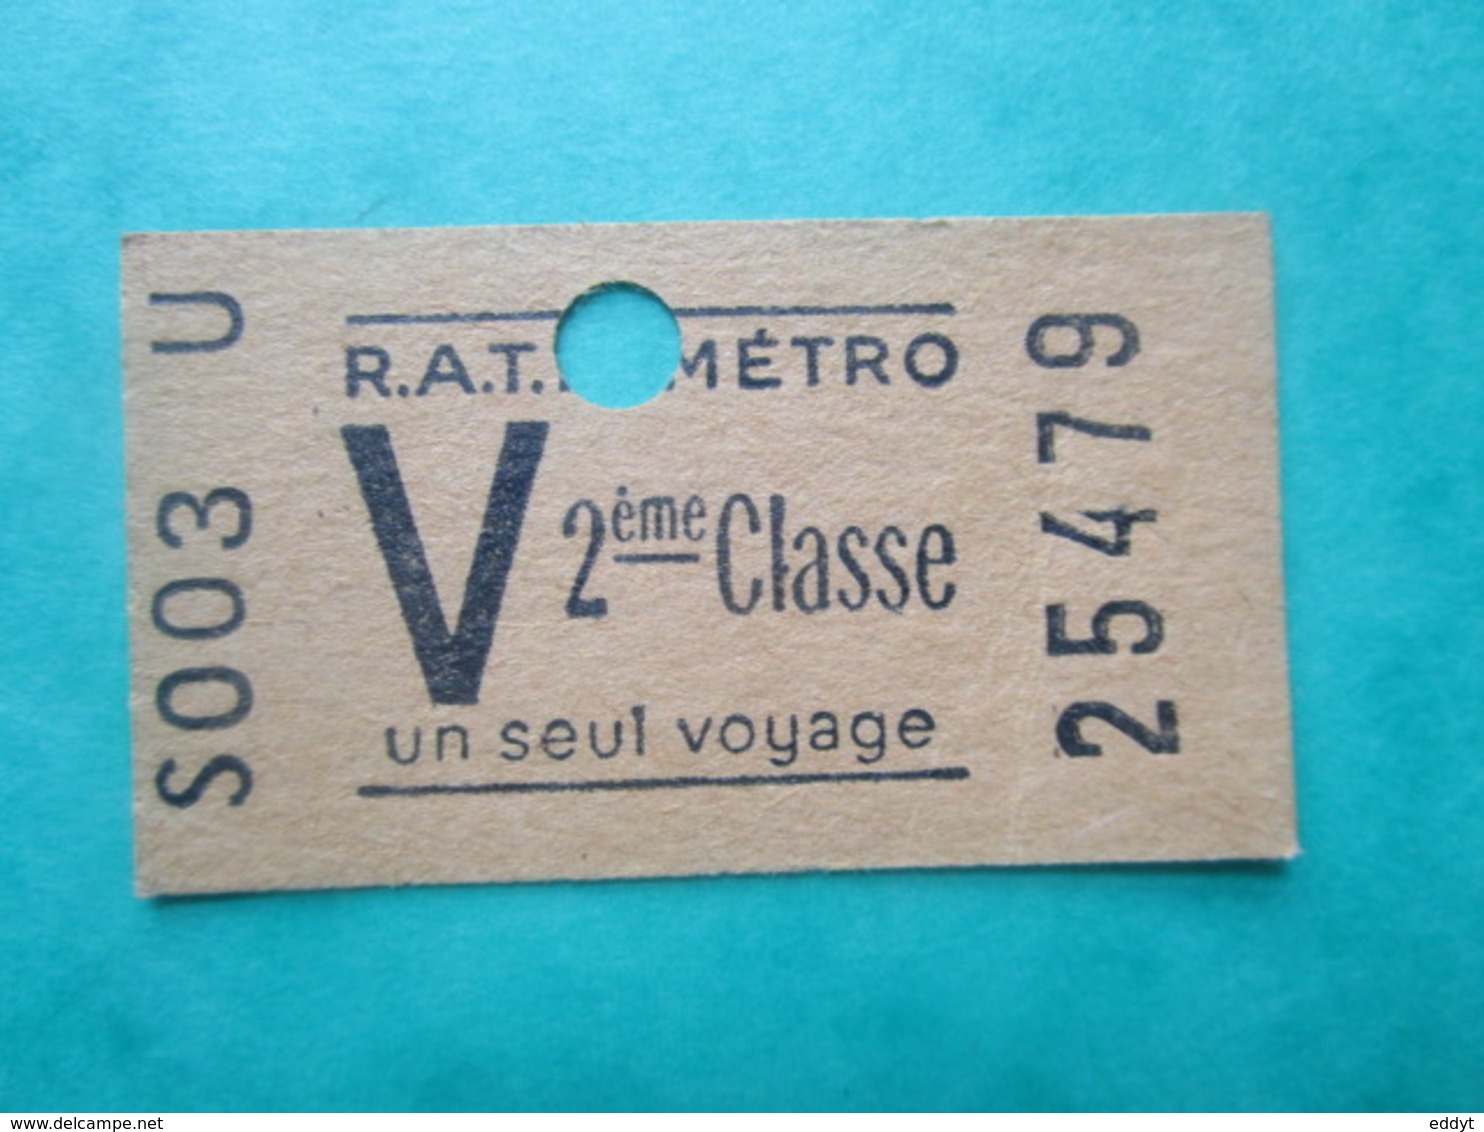 TICKET  Métro  RATP  PARIS " V "  - 2° Classe - UN SEUL VOYAGE   - 1958 - TBE - Wereld